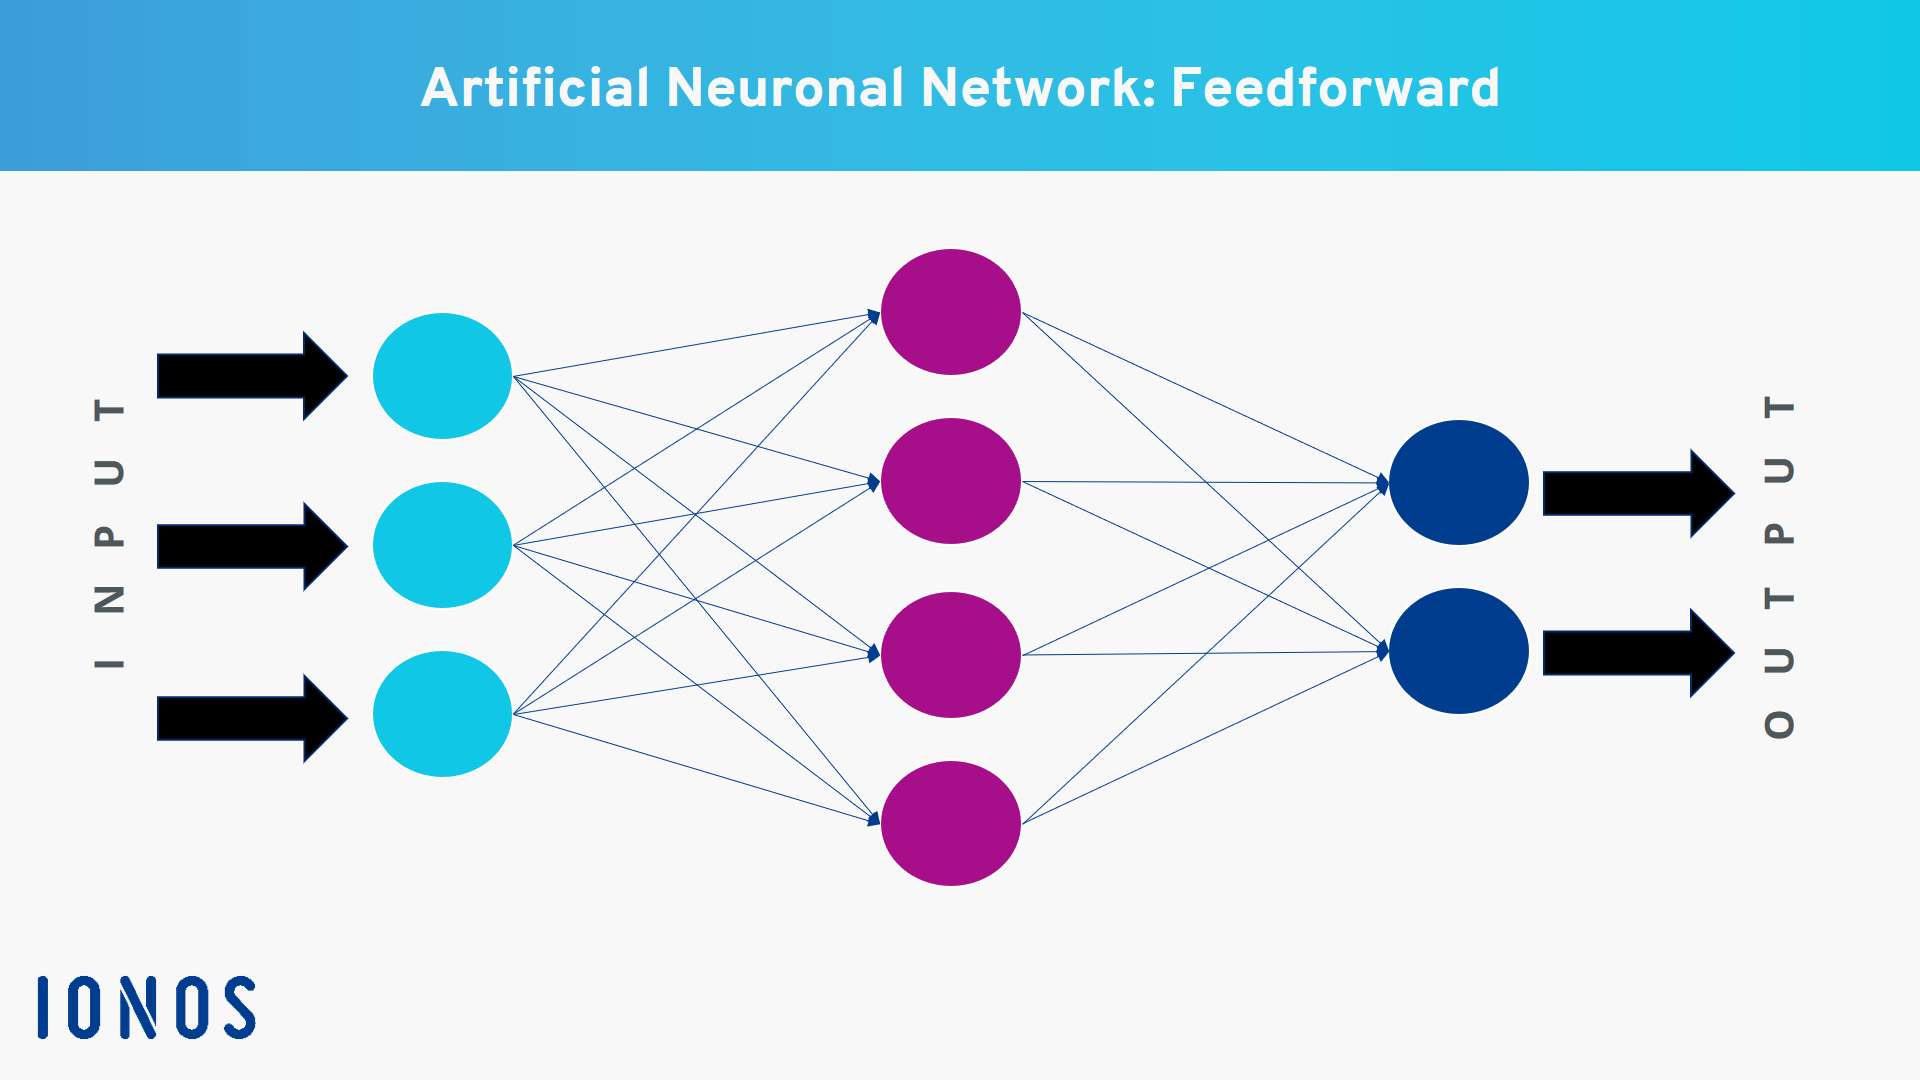 Example of an artificial feedforward neural network with a hidden layer